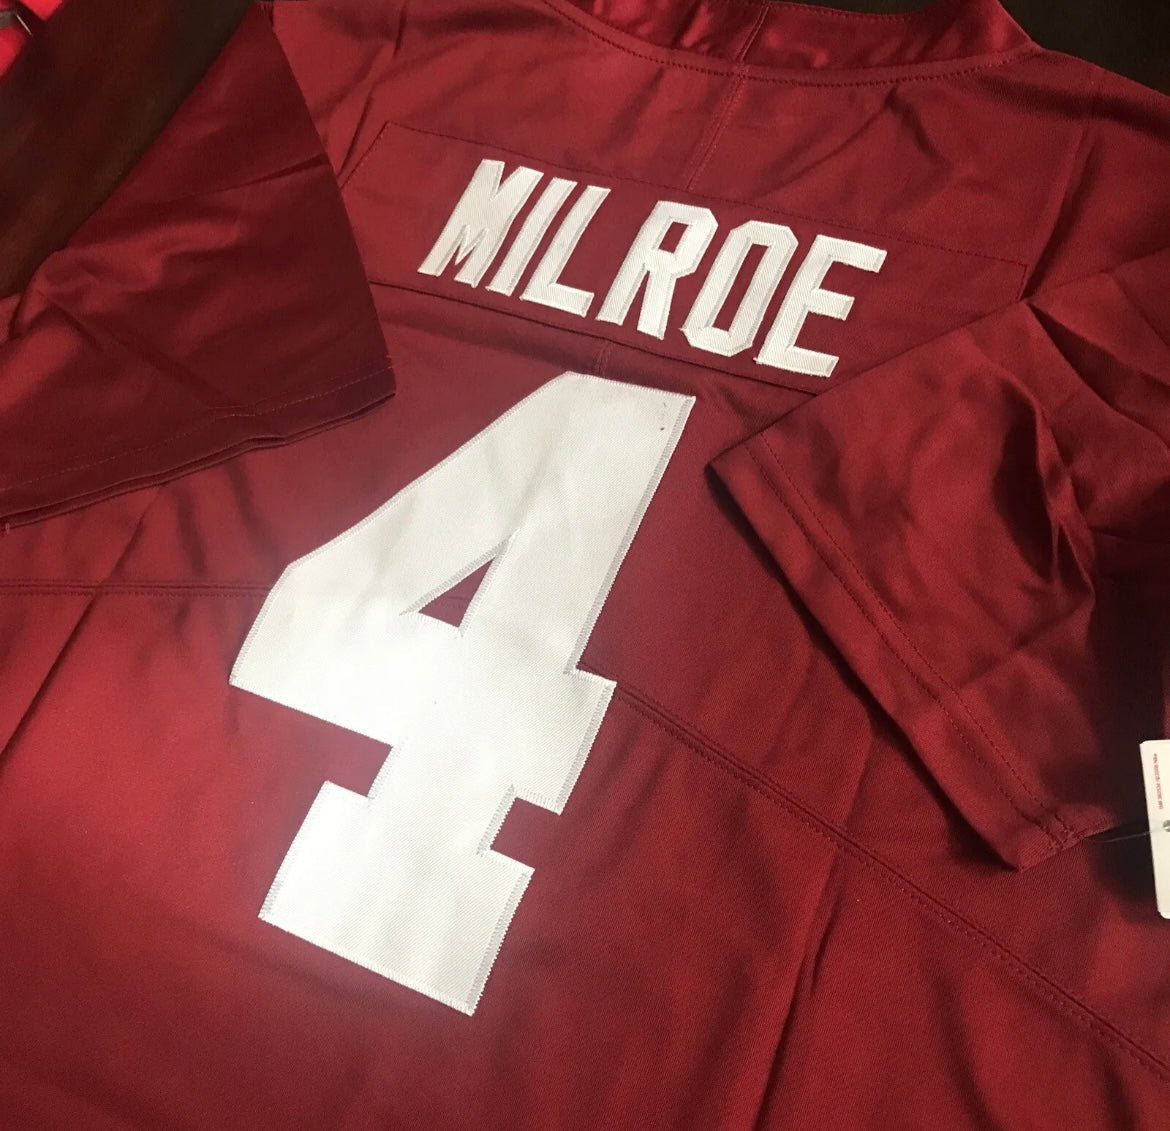 Jalen Milroe Alabama Crimson Tide Nike NCAA Campus Legends Player Jersey - Crimson & White